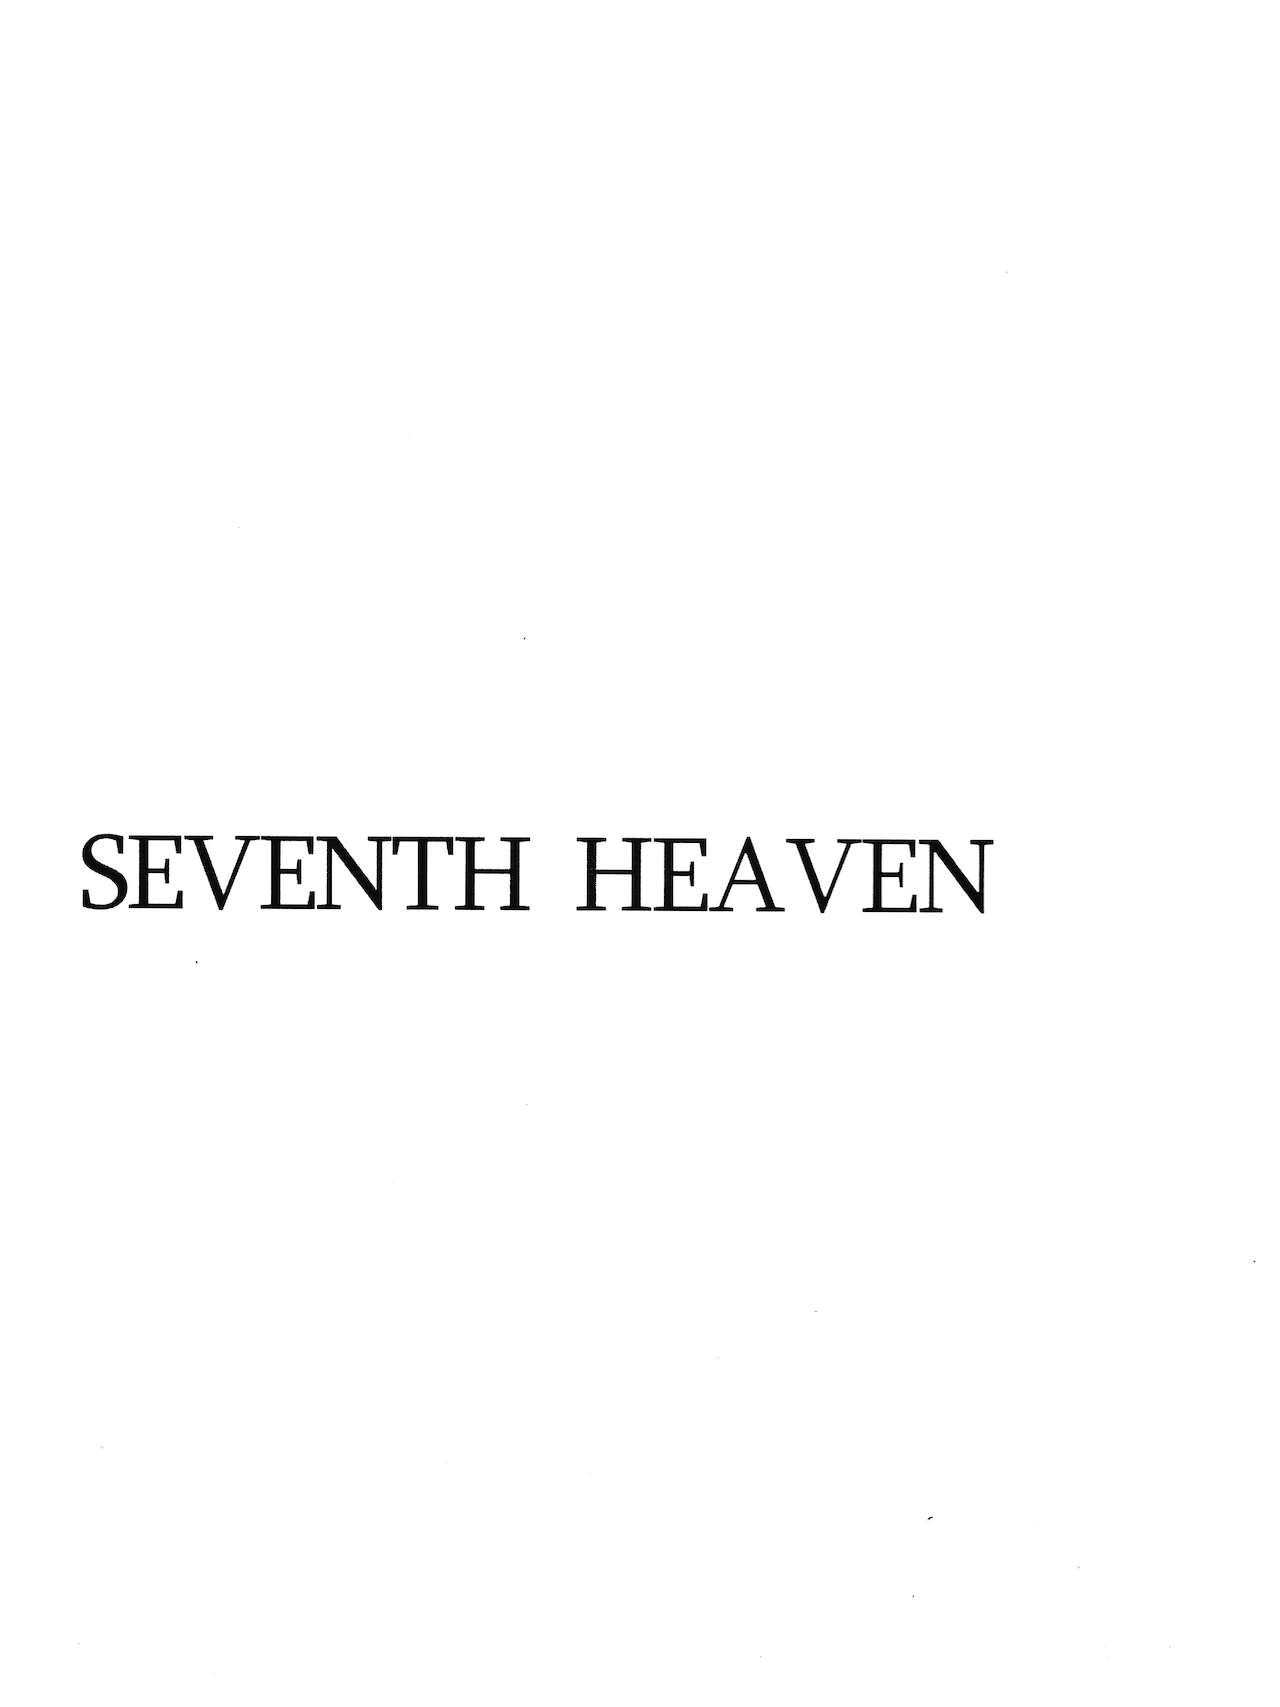 (C78) [TSETSEG (暮尾金魚)] SEVENTH HEAVEN (Axis Powers ヘタリア)